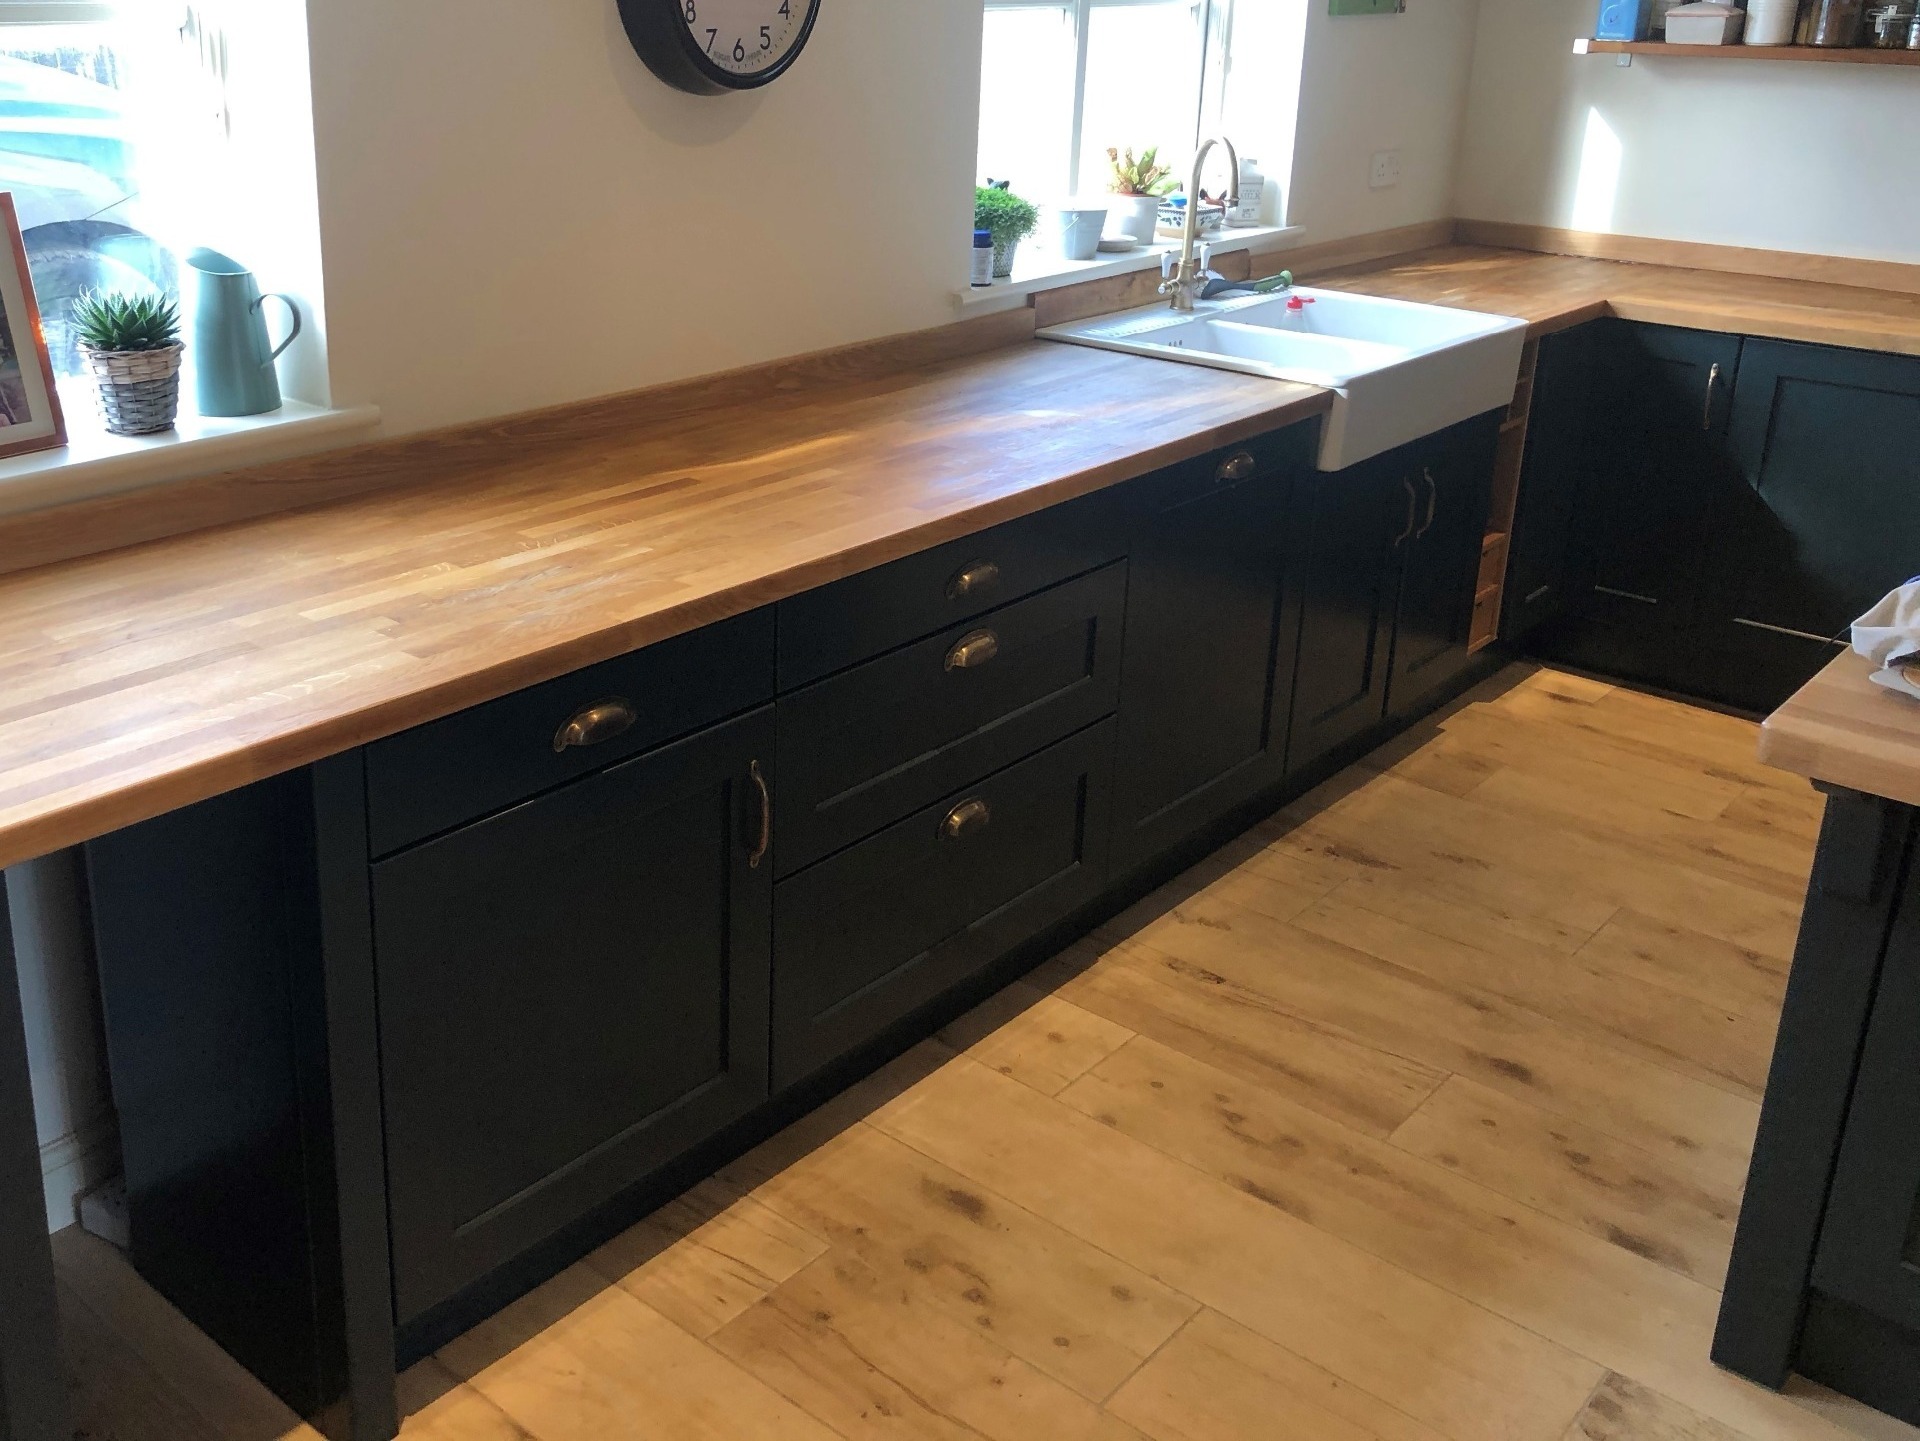 Shaker kitchen cabinets with oak worktop